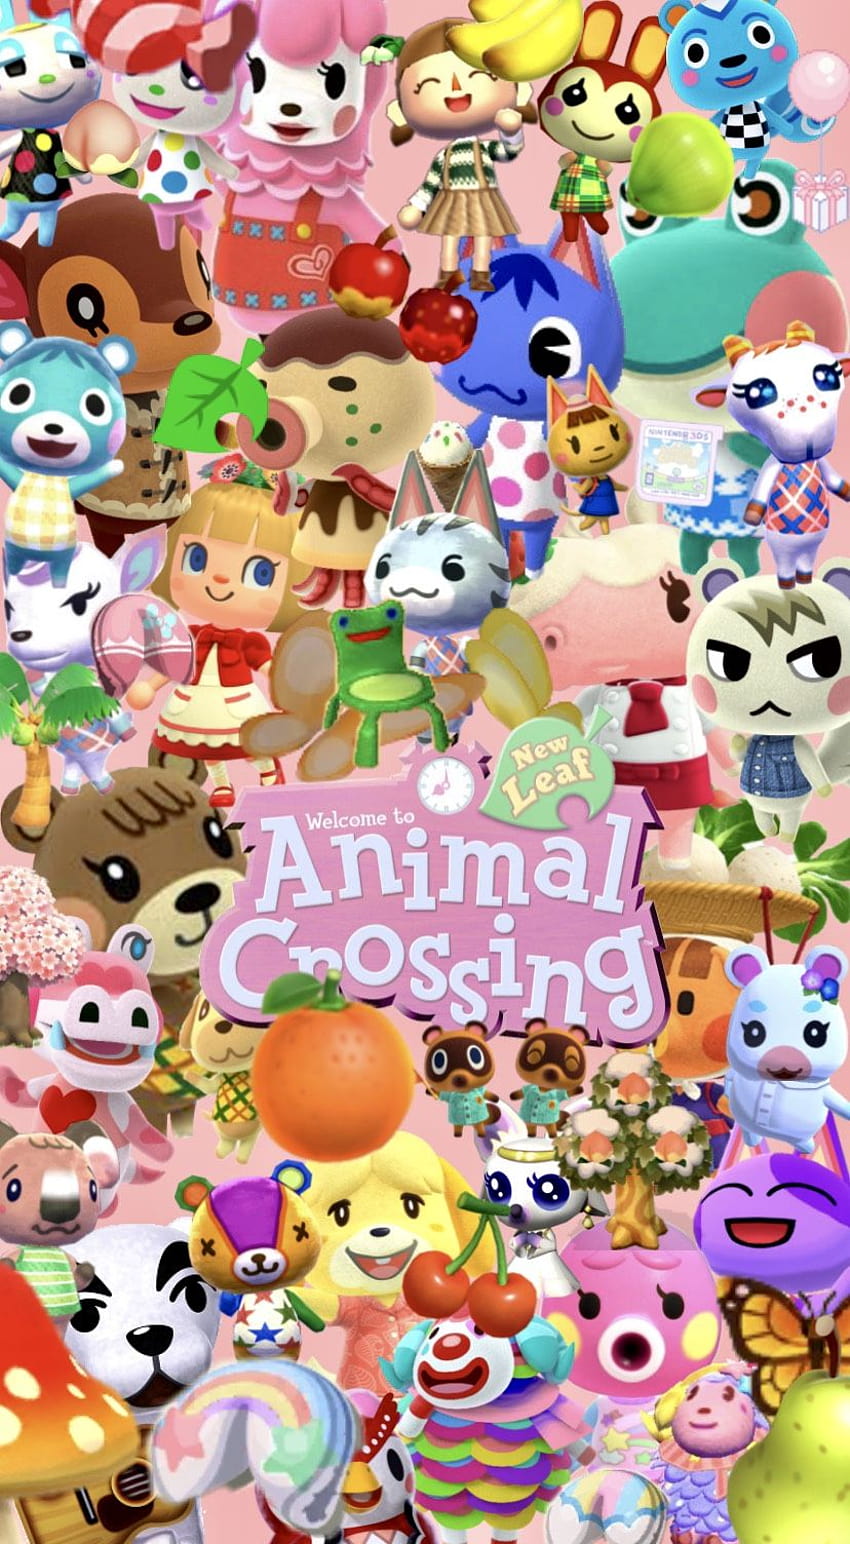 The animal crossing wallpaper - Animal Crossing